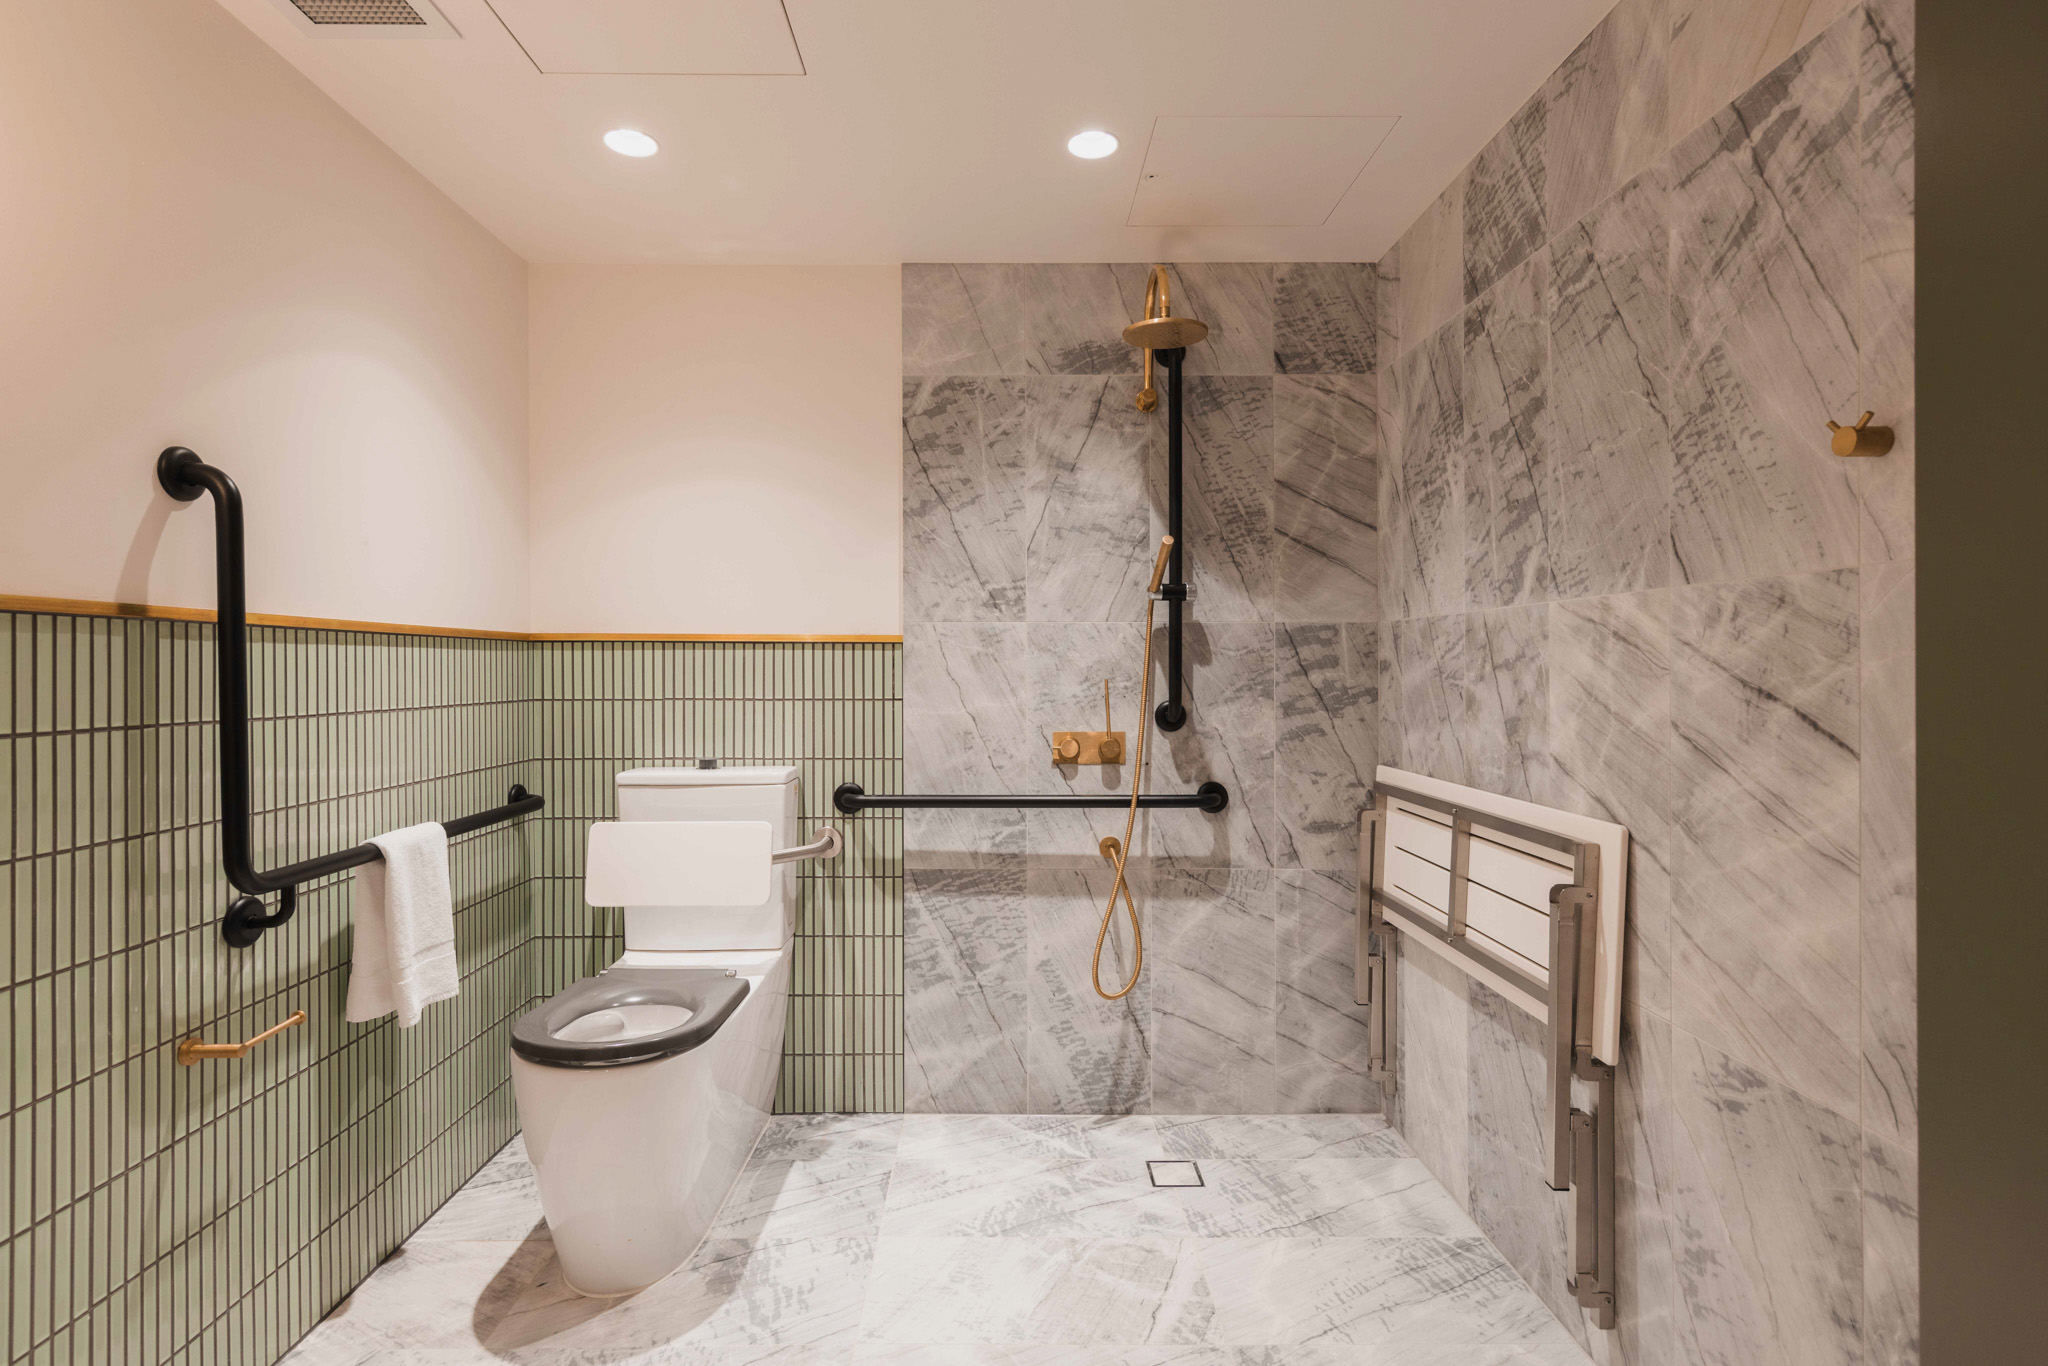 Bathroom Accesseble - Hotel Room Double - Urban Rest - The Sarah Hotel - Surry Hills - Sydney